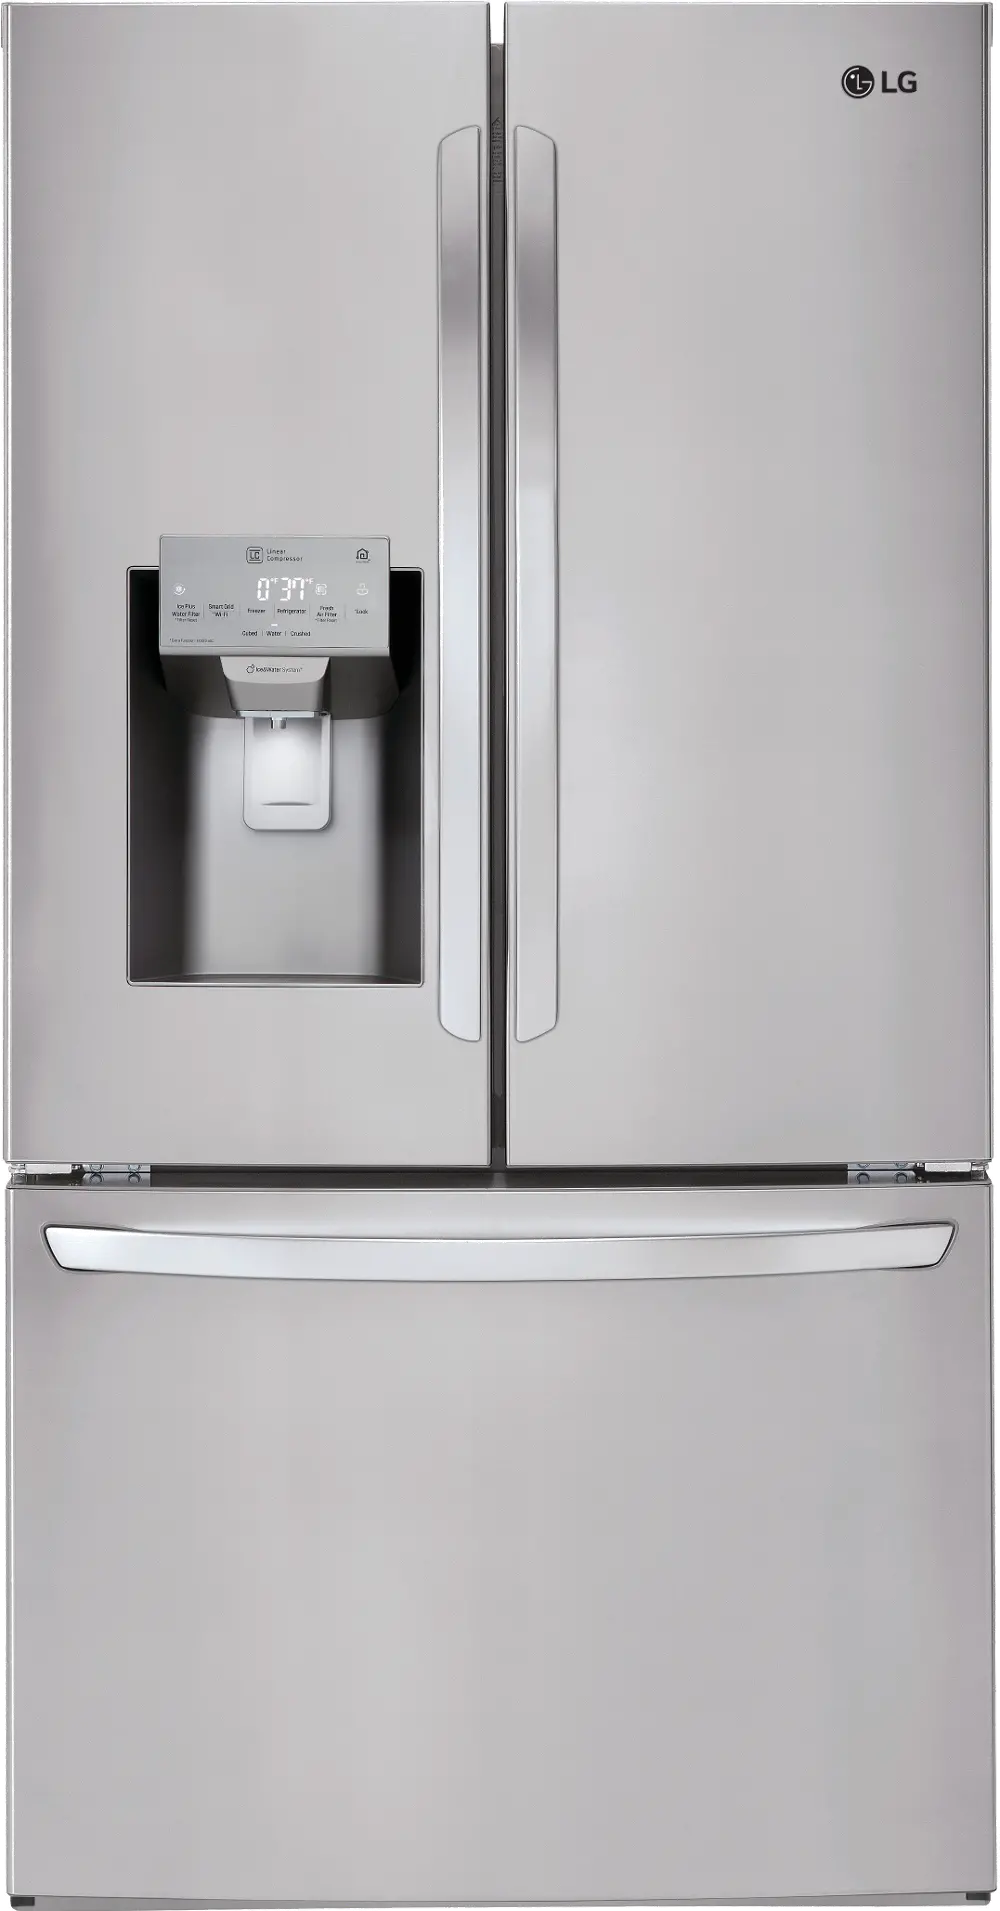 LFXC22526S LG 22.1 cu ft French Door Refrigerator - Counter Depth Stainless Steel-1